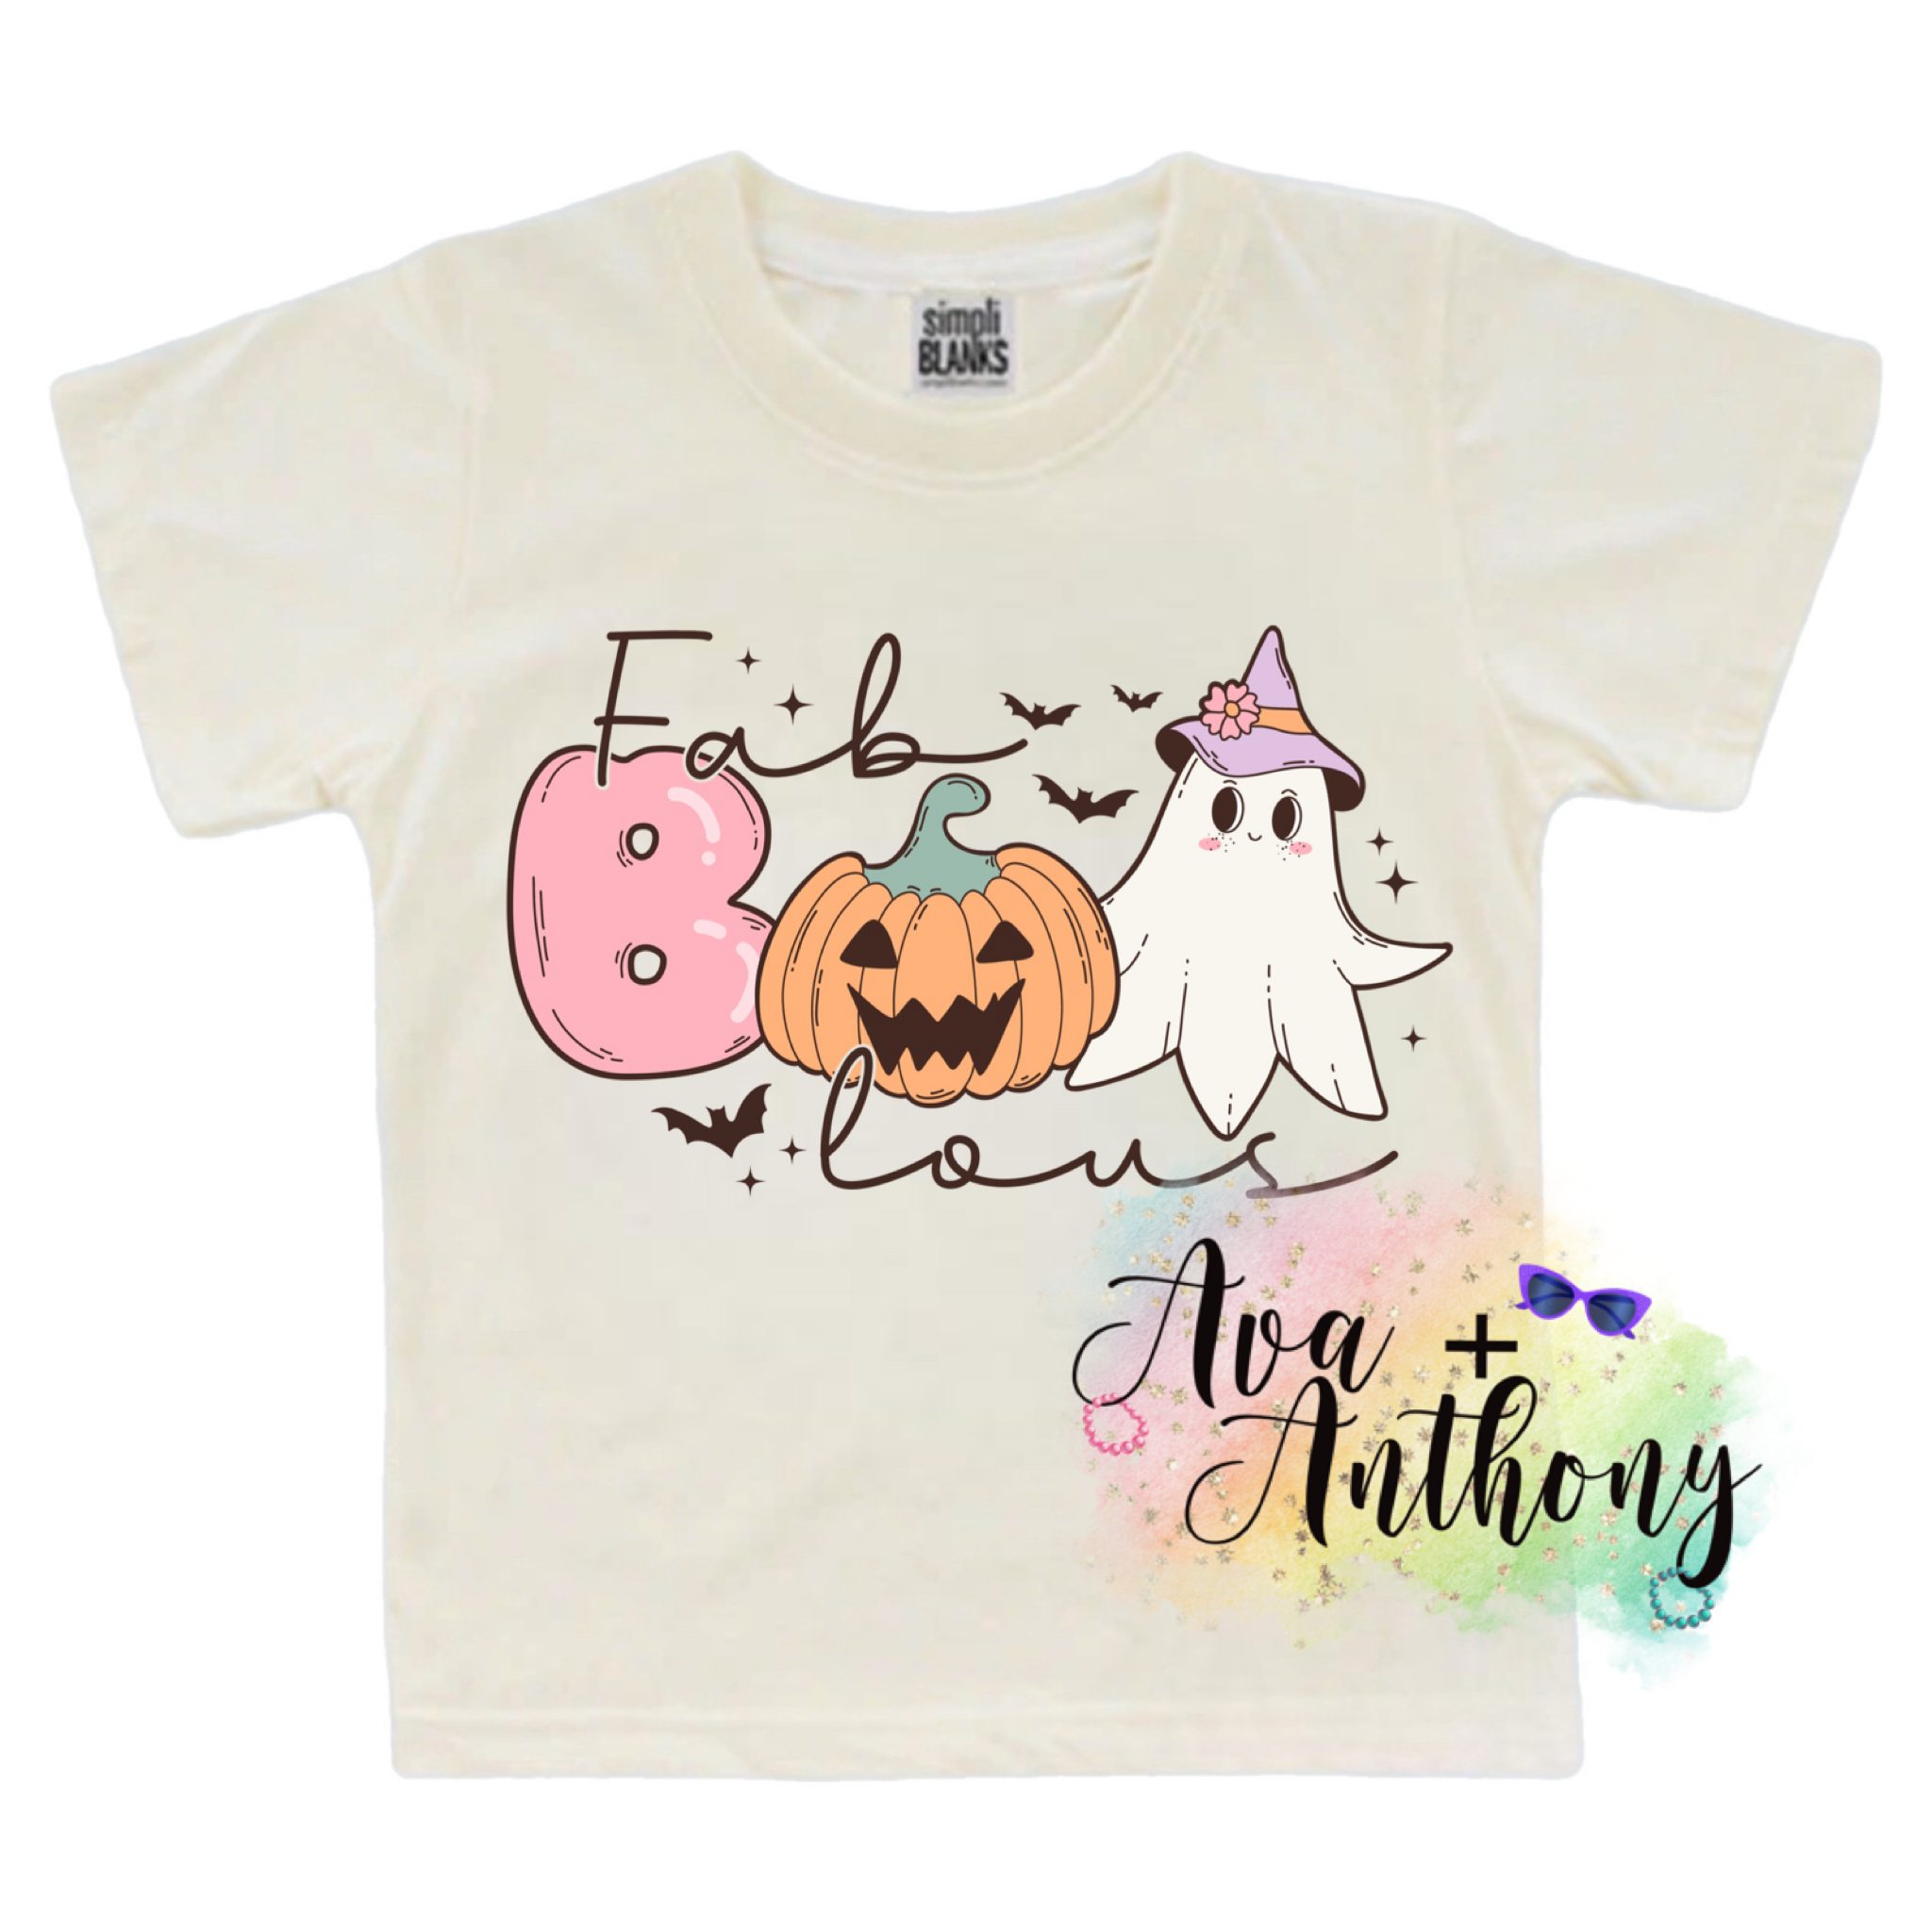 Fa-boo-lous Halloween t-shirt